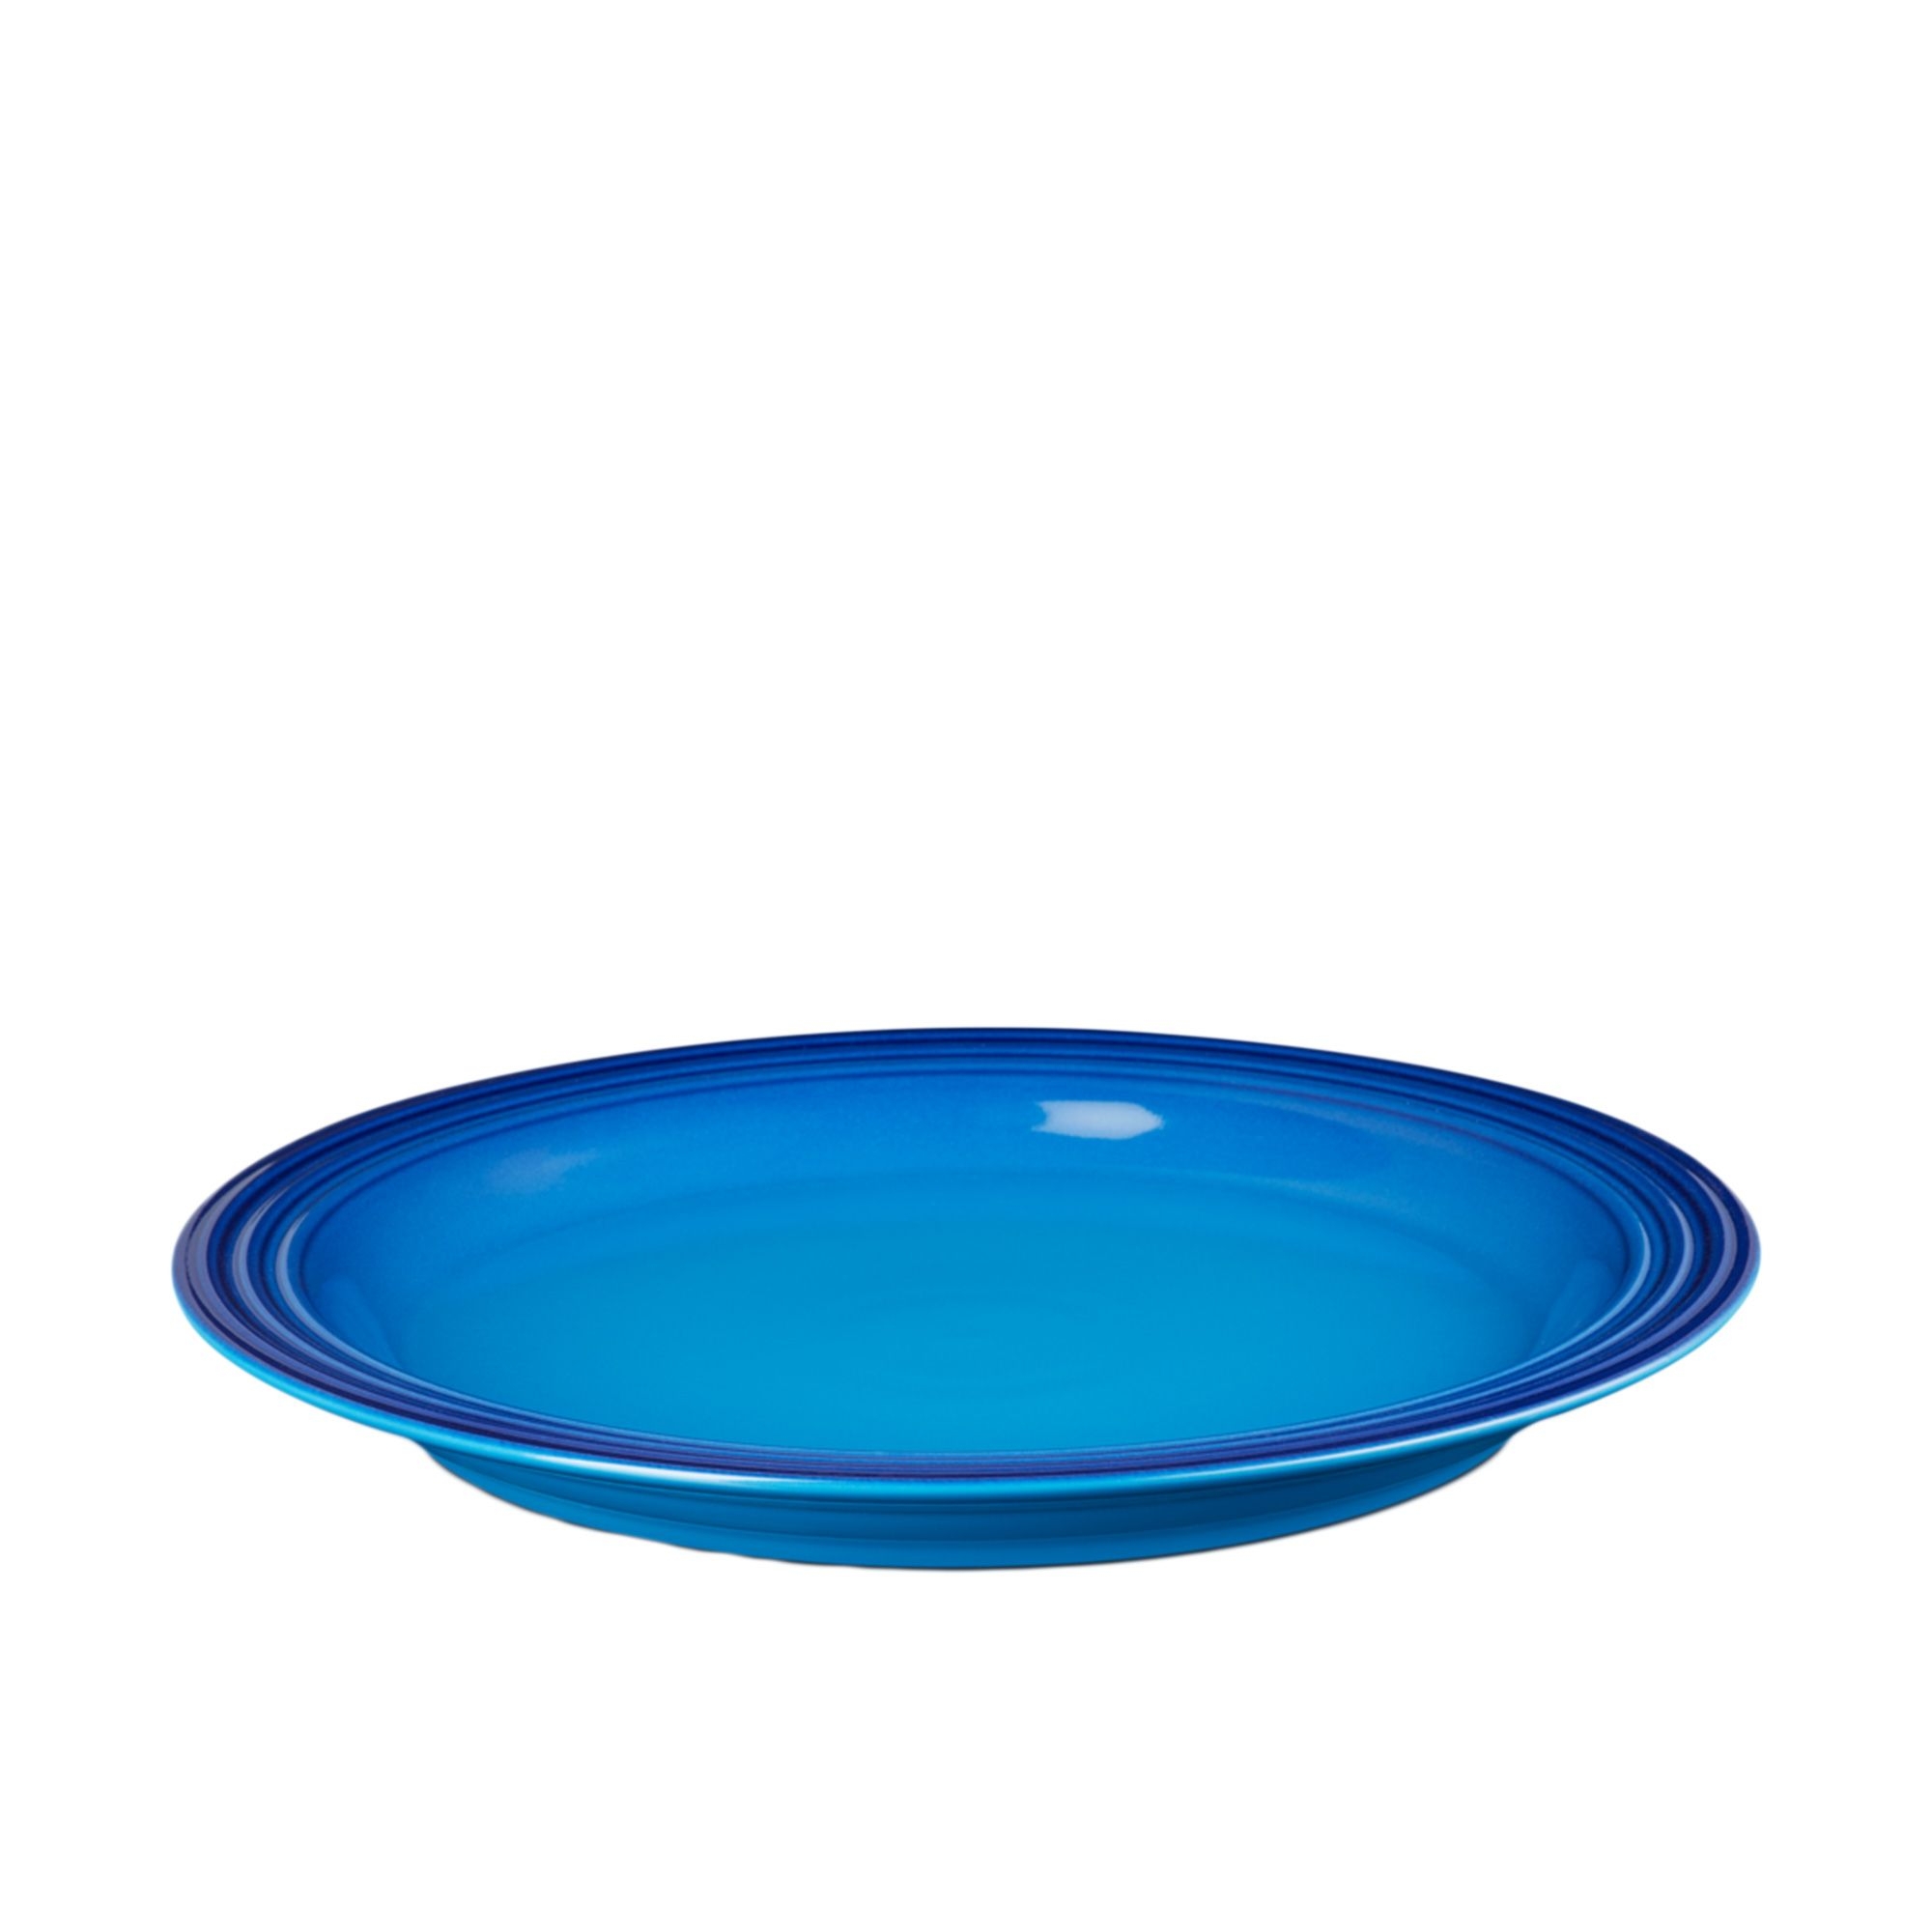 Le Creuset Stoneware Dinner Plate Set of 4 Azure Blue Image 2